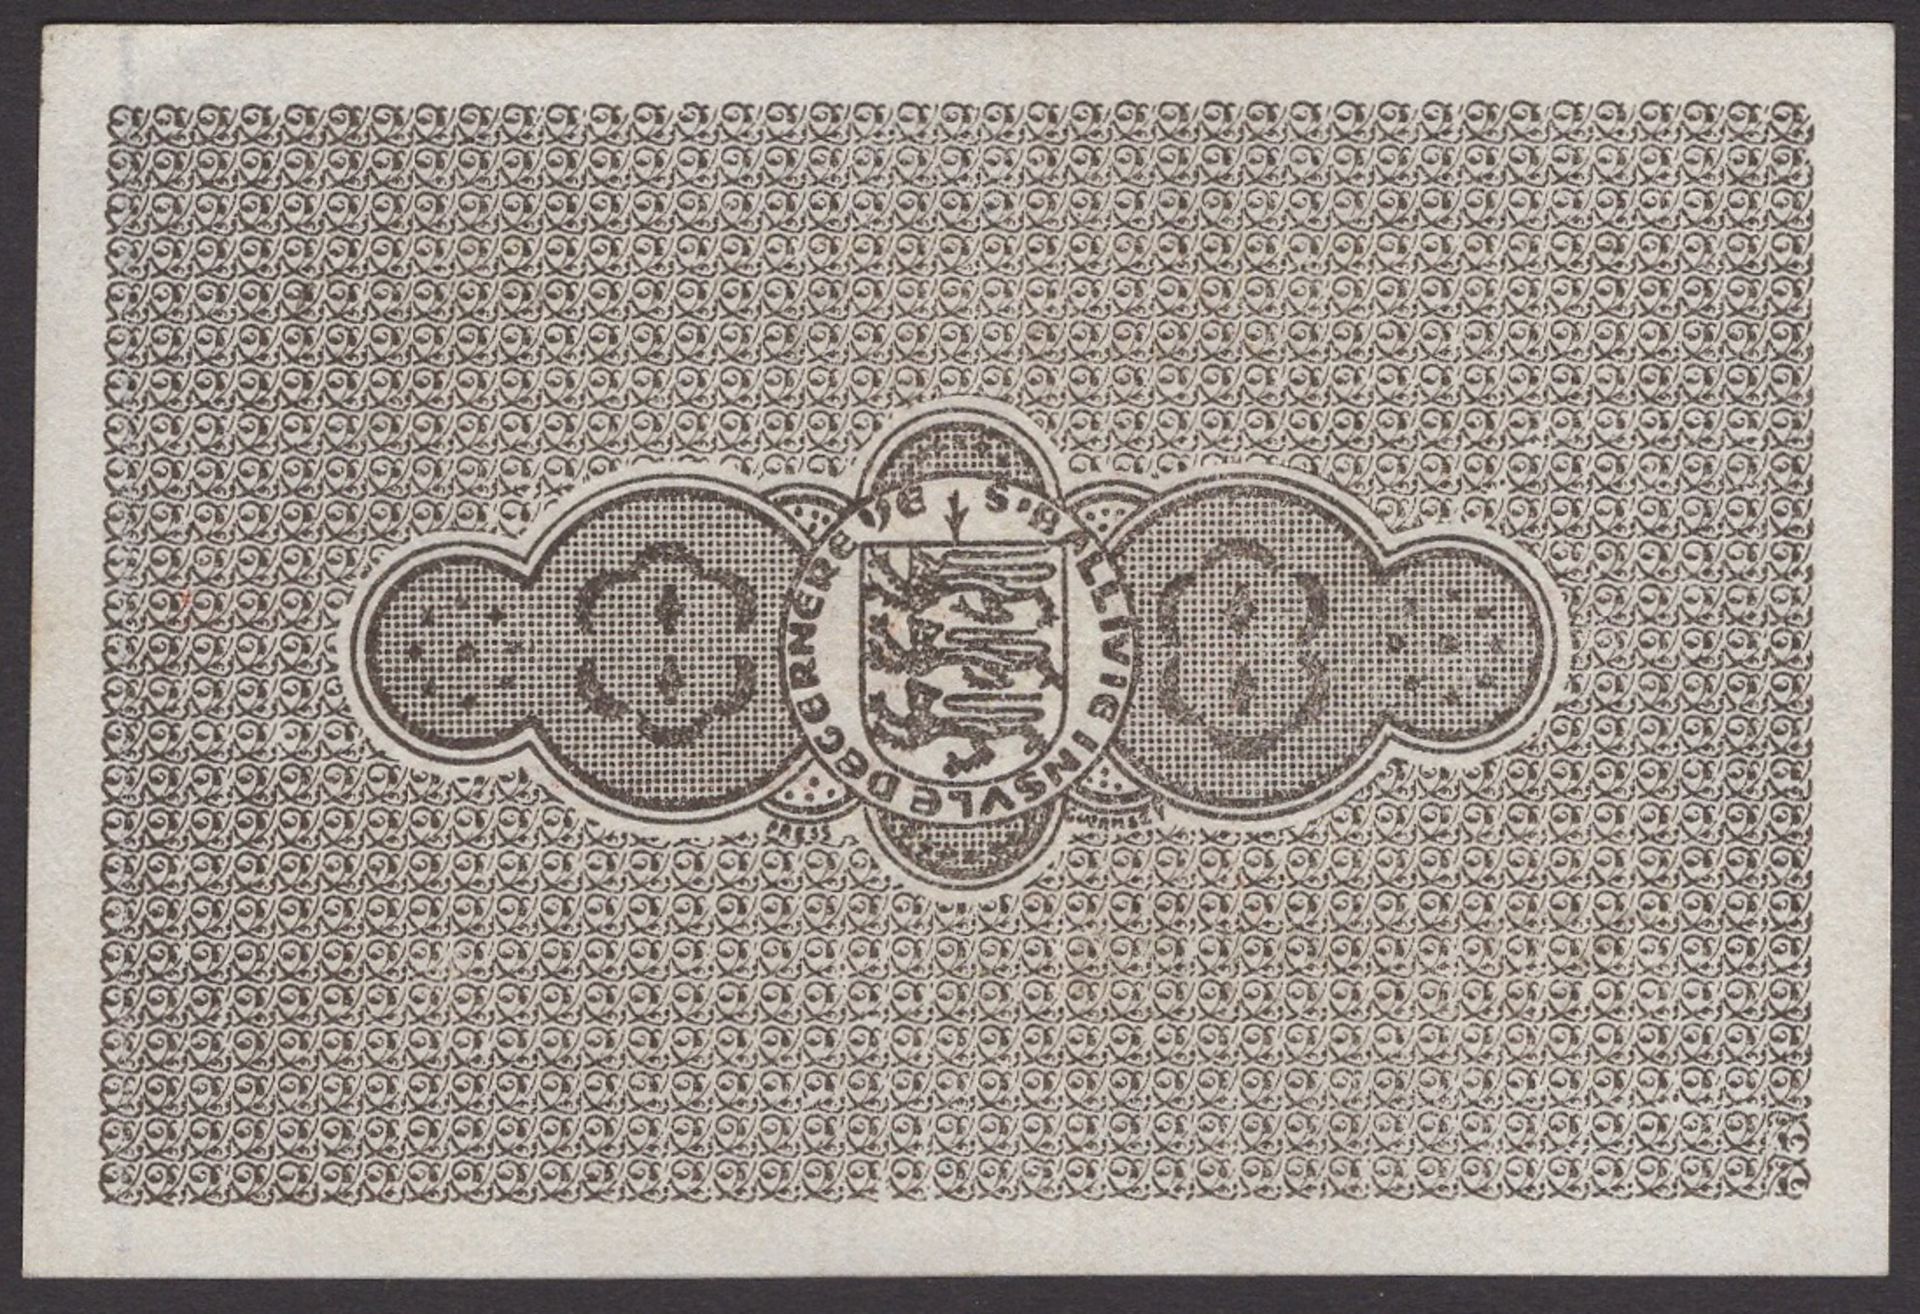 British Banknotes - Image 2 of 2